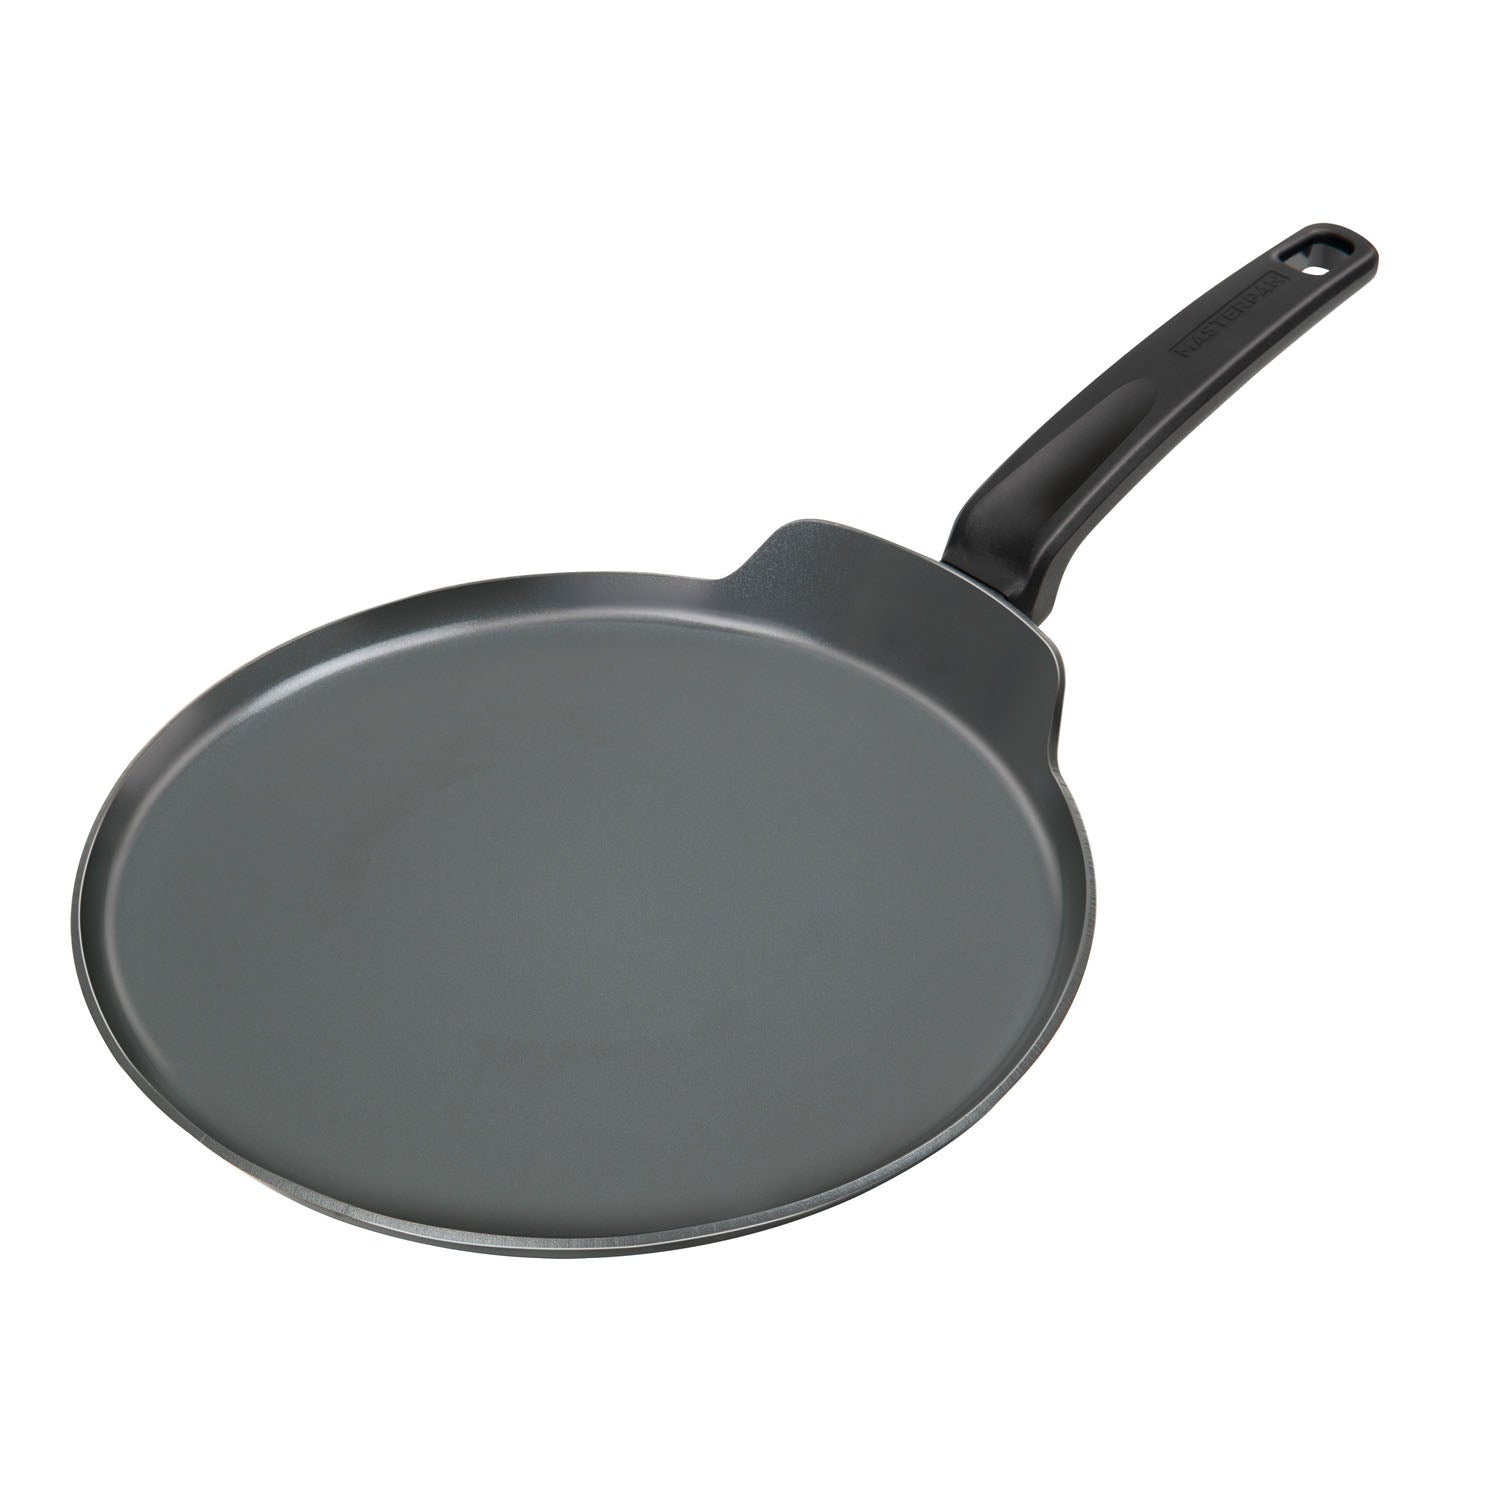 Generic Crepe-/pancake pan, stainless steel/non-stick coating, 24 cmAAA UAE